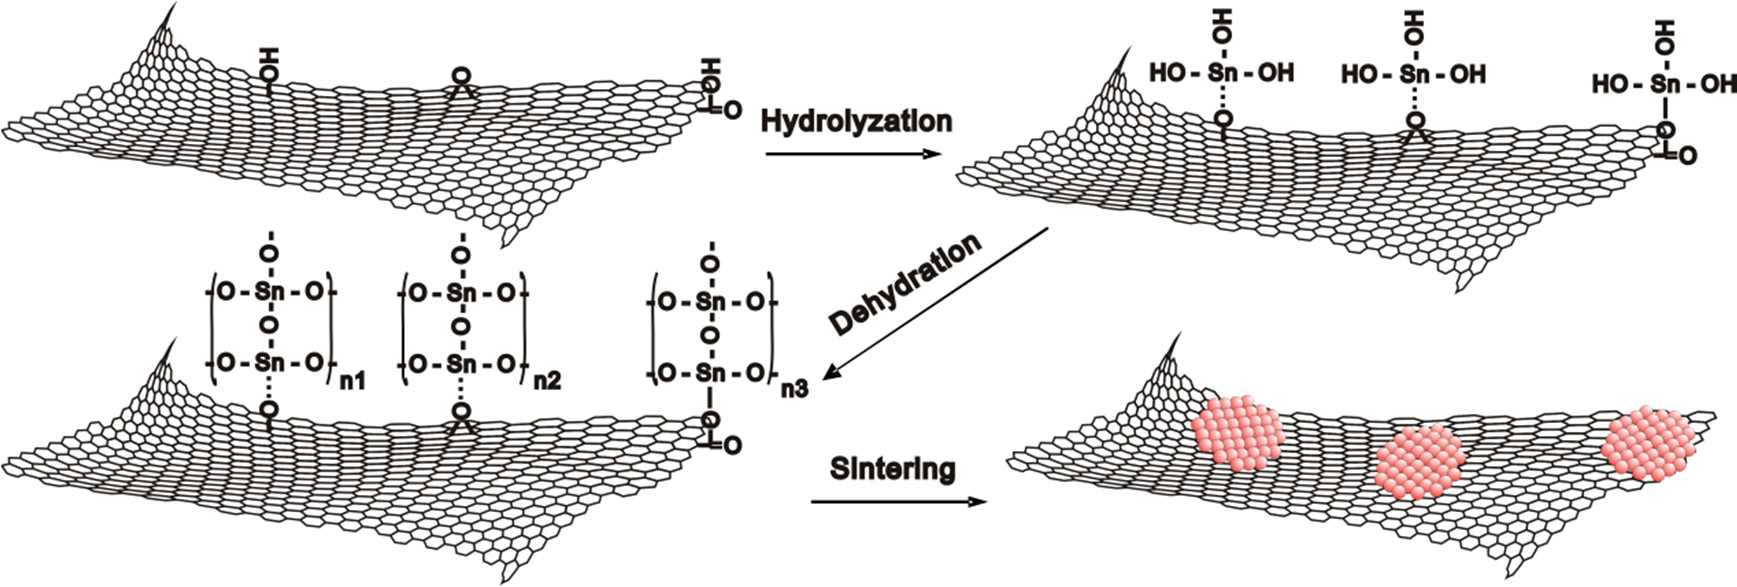 Illustration for the formation mechanism of SnO2/graphene composites.